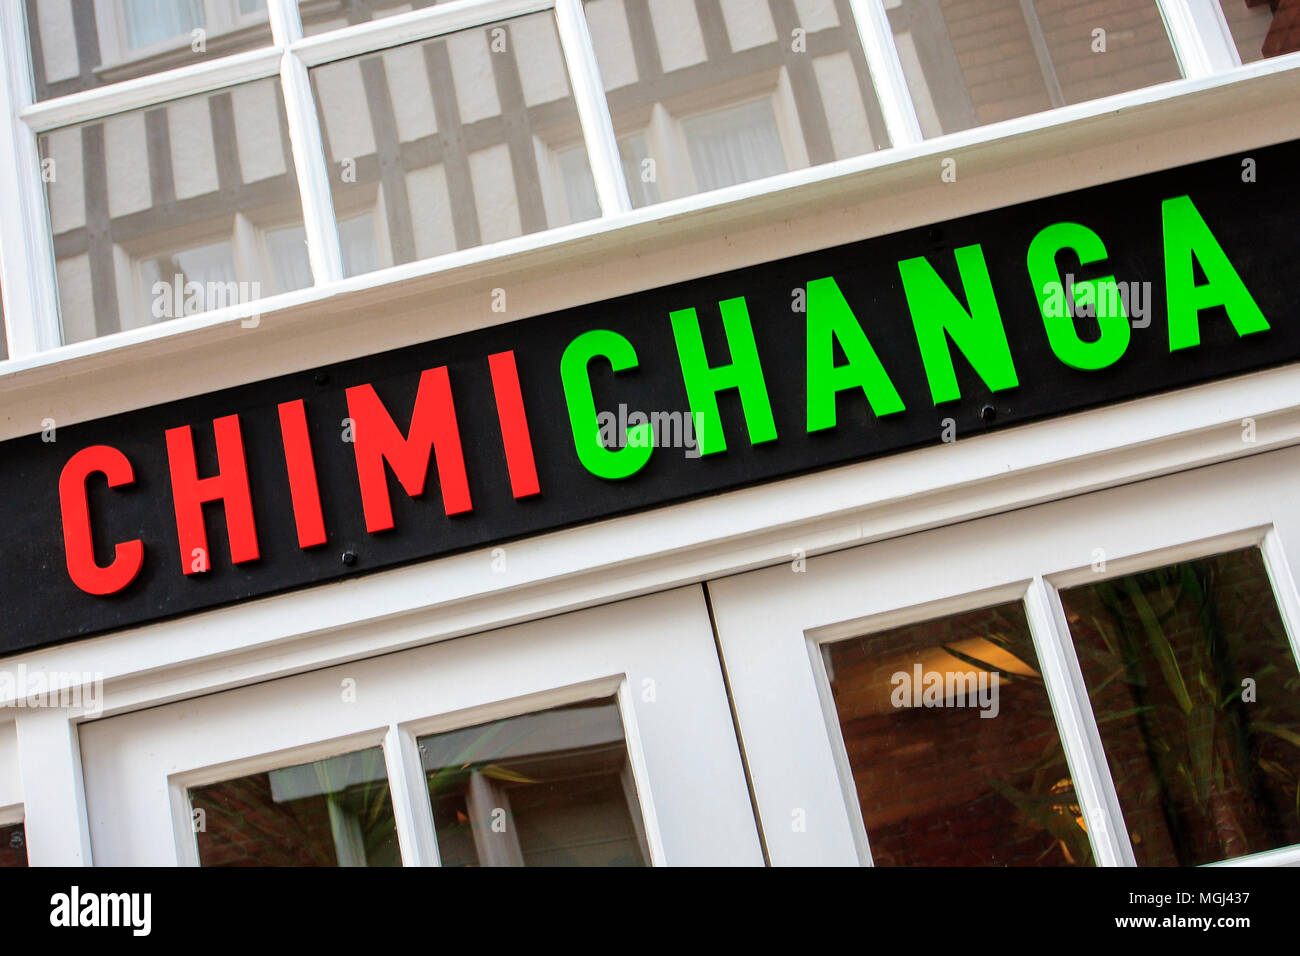 Chimichanga Mexican Restaurant Menu Canterbury UK Illuminated Sign